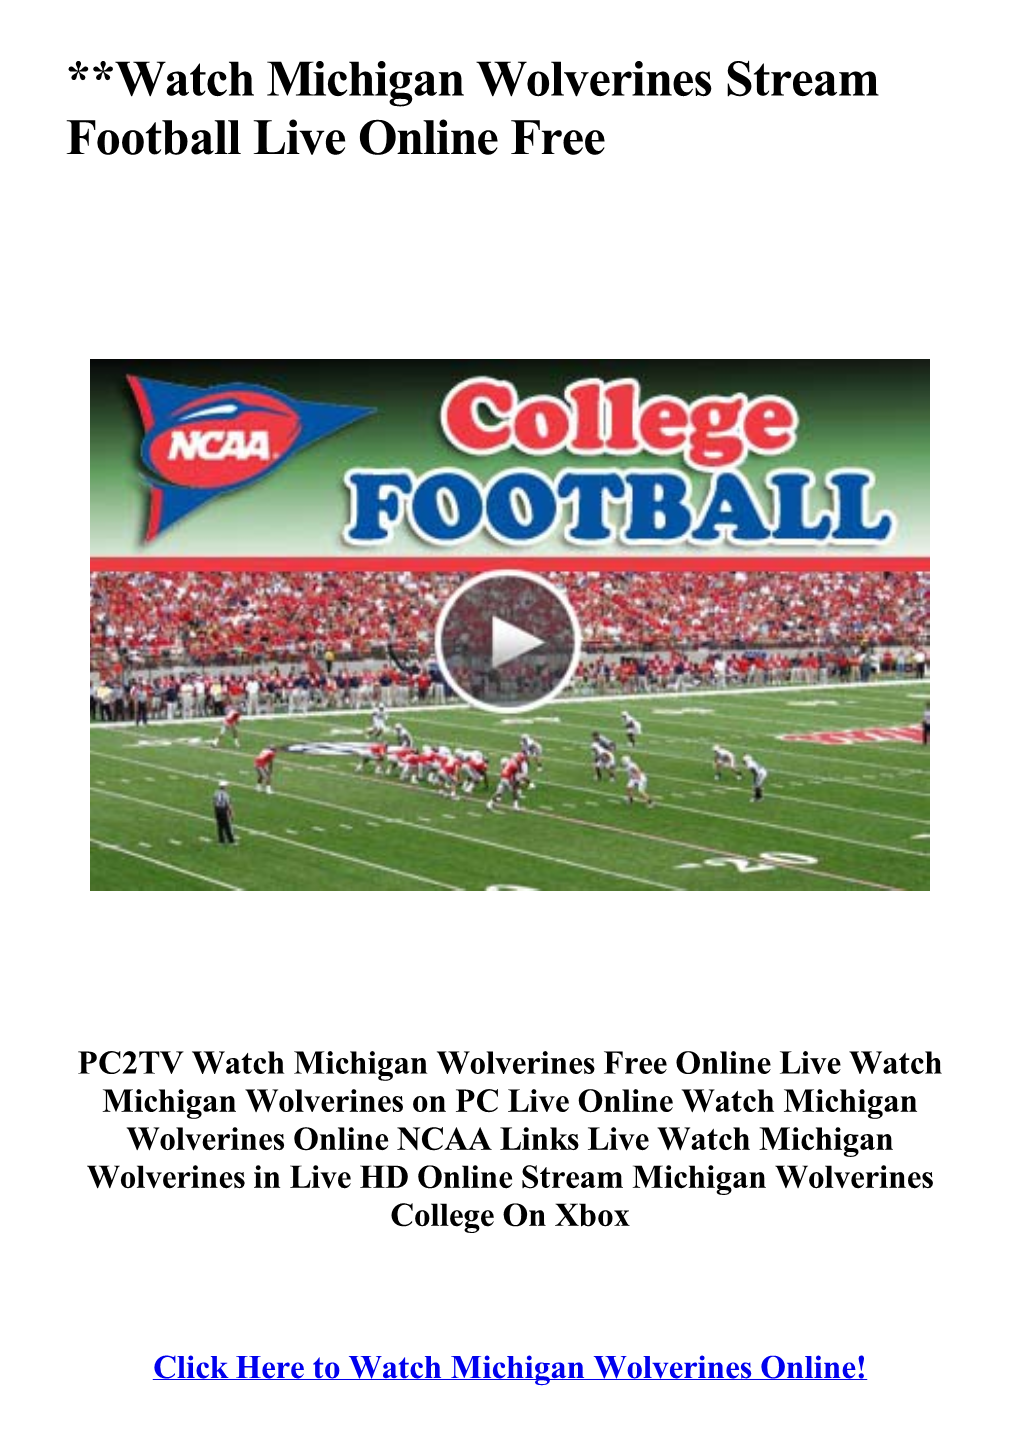 **Watch Michigan Wolverines Stream Football Live Online Free